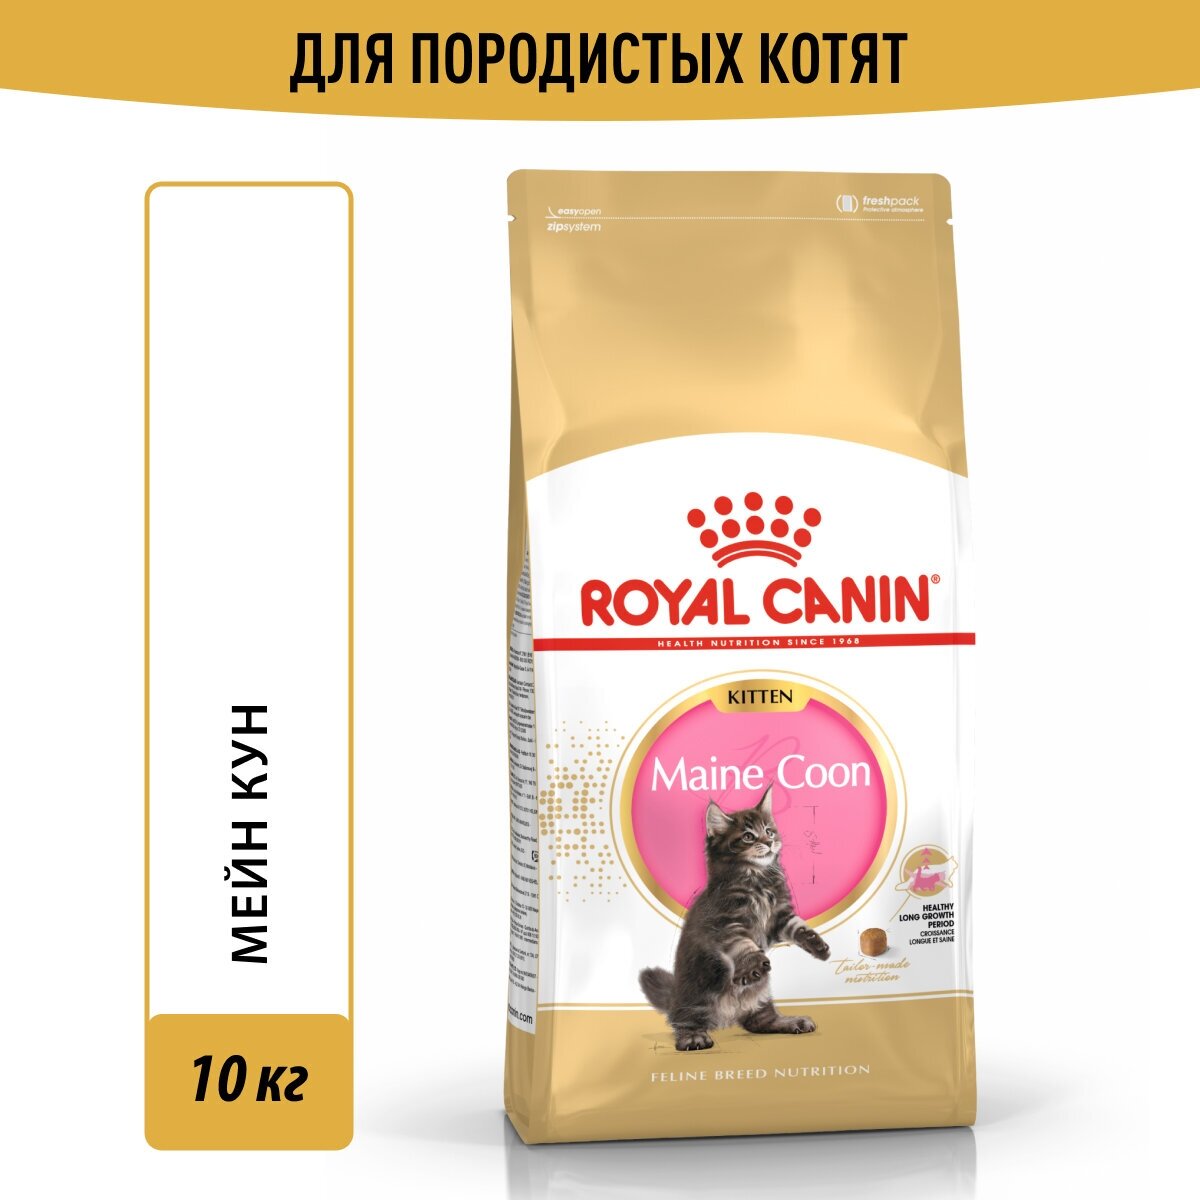 ROYAL CANIN MAINE COON KITTEN 36 для котят мэйн кун (10 кг)